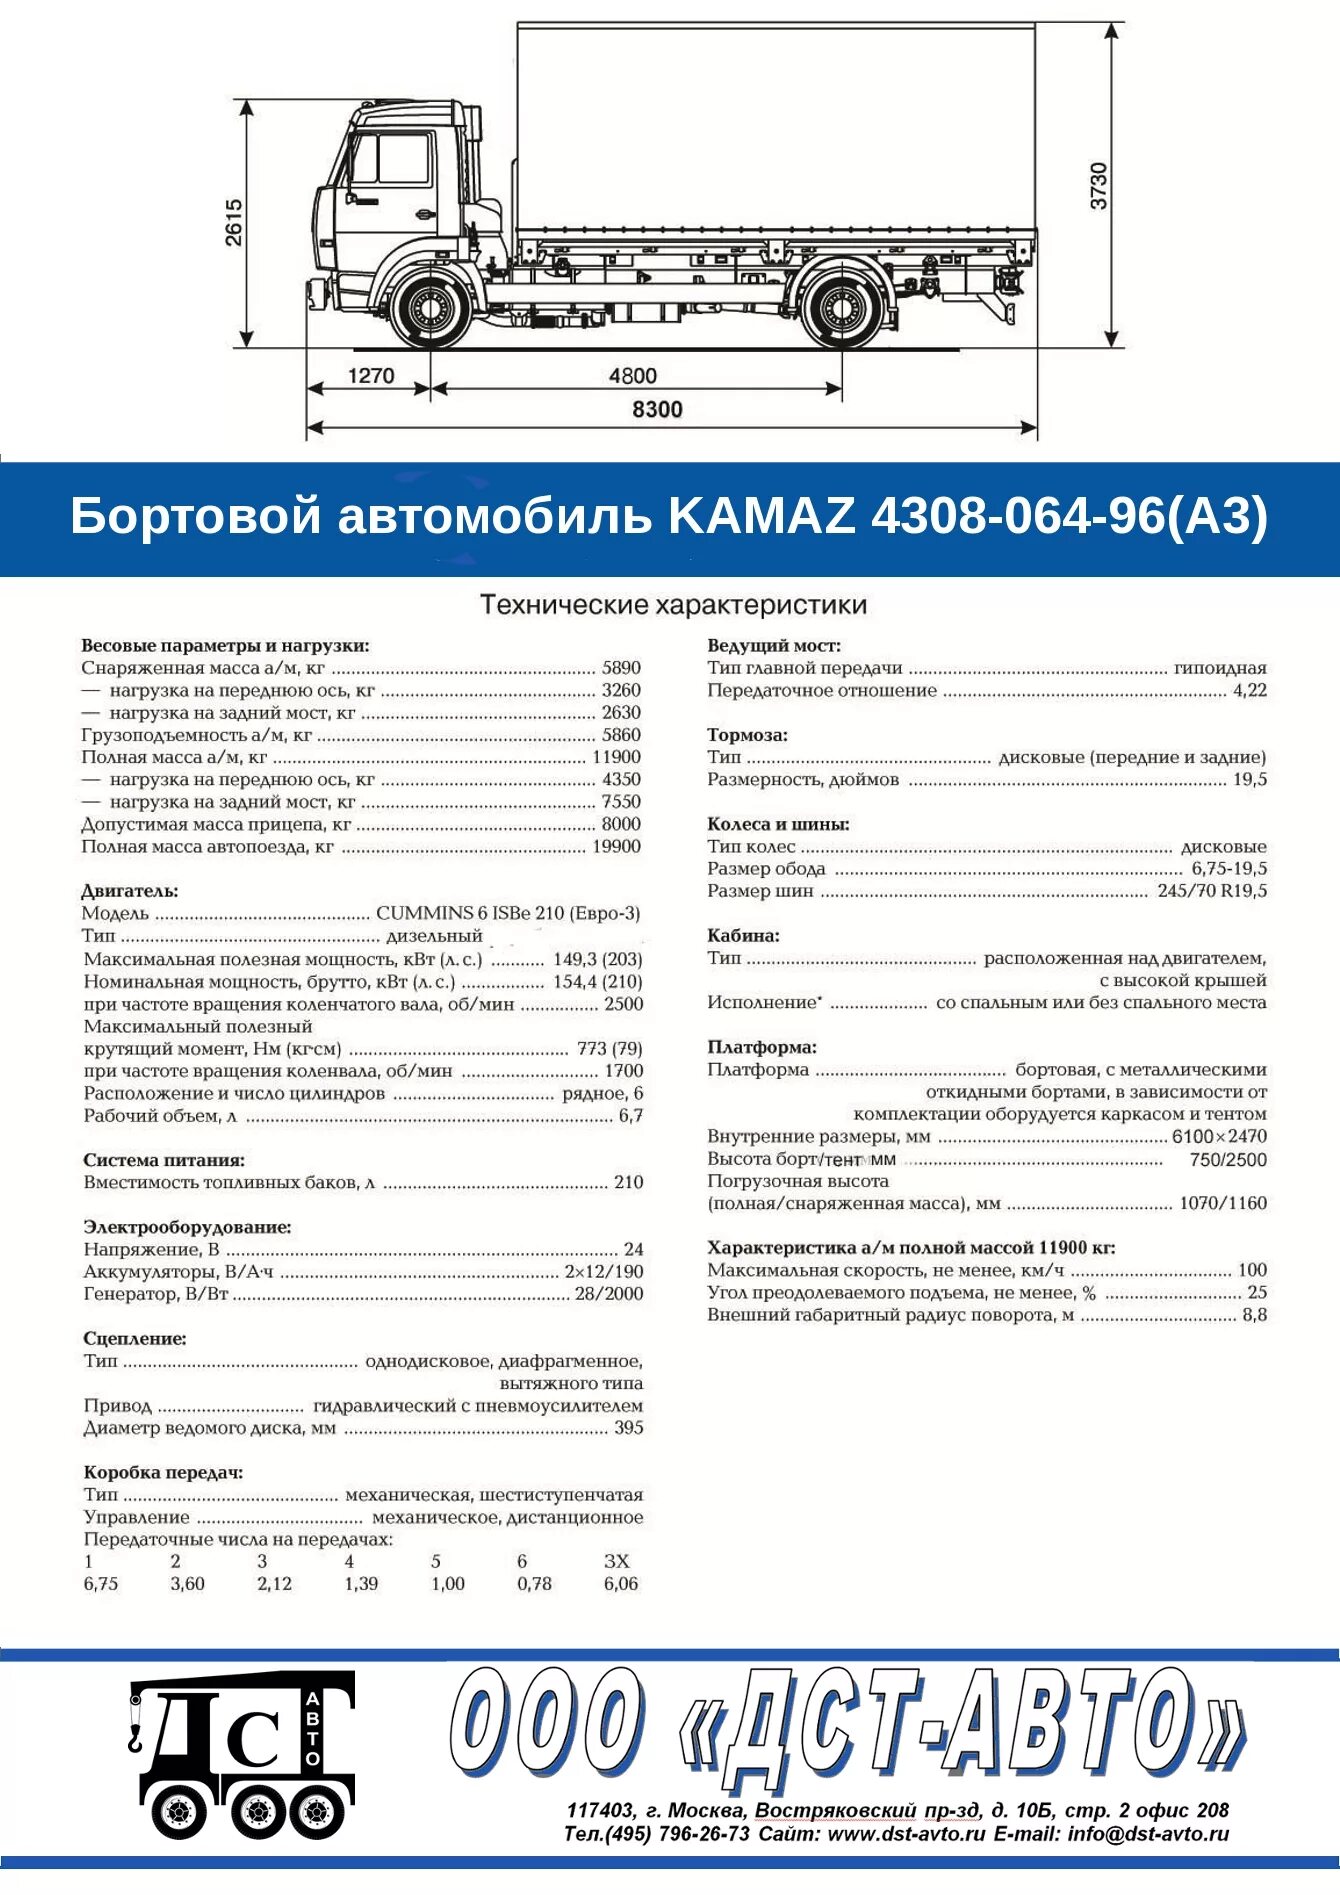 Характеристика автомобилей камаз. Бортовая платформа КАМАЗ 4308. Заправочные емкости КАМАЗ 4308. КАМАЗ 4308 размер заднего колеса. КАМАЗ 4308 характеристики.